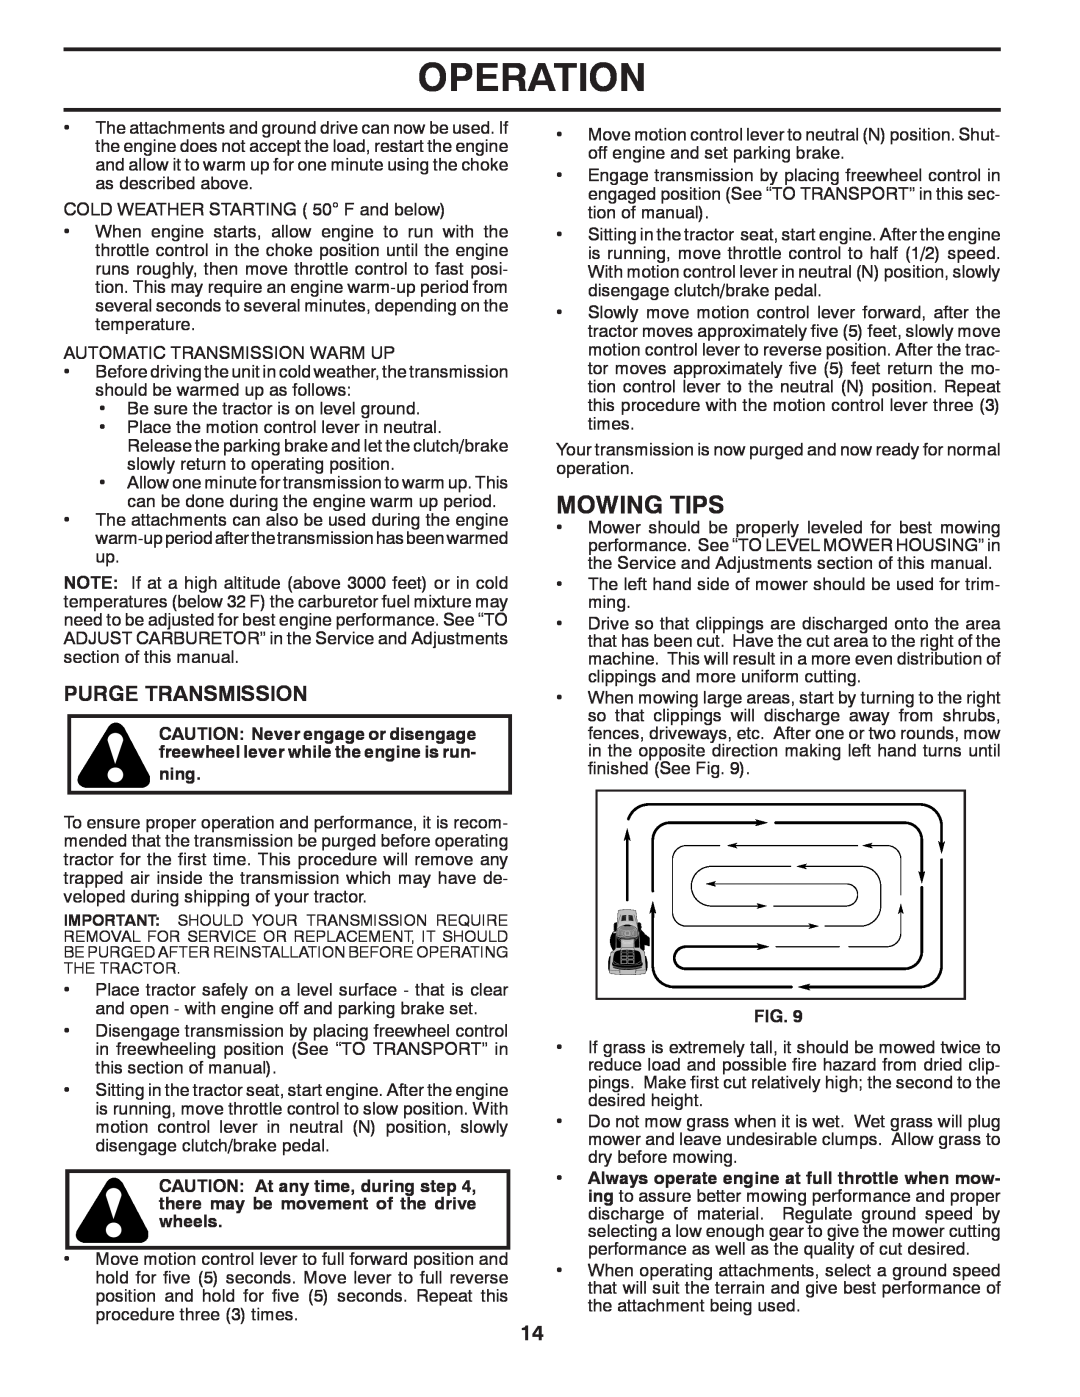 Poulan 419450 manual Mowing Tips, Purge Transmission, Operation 